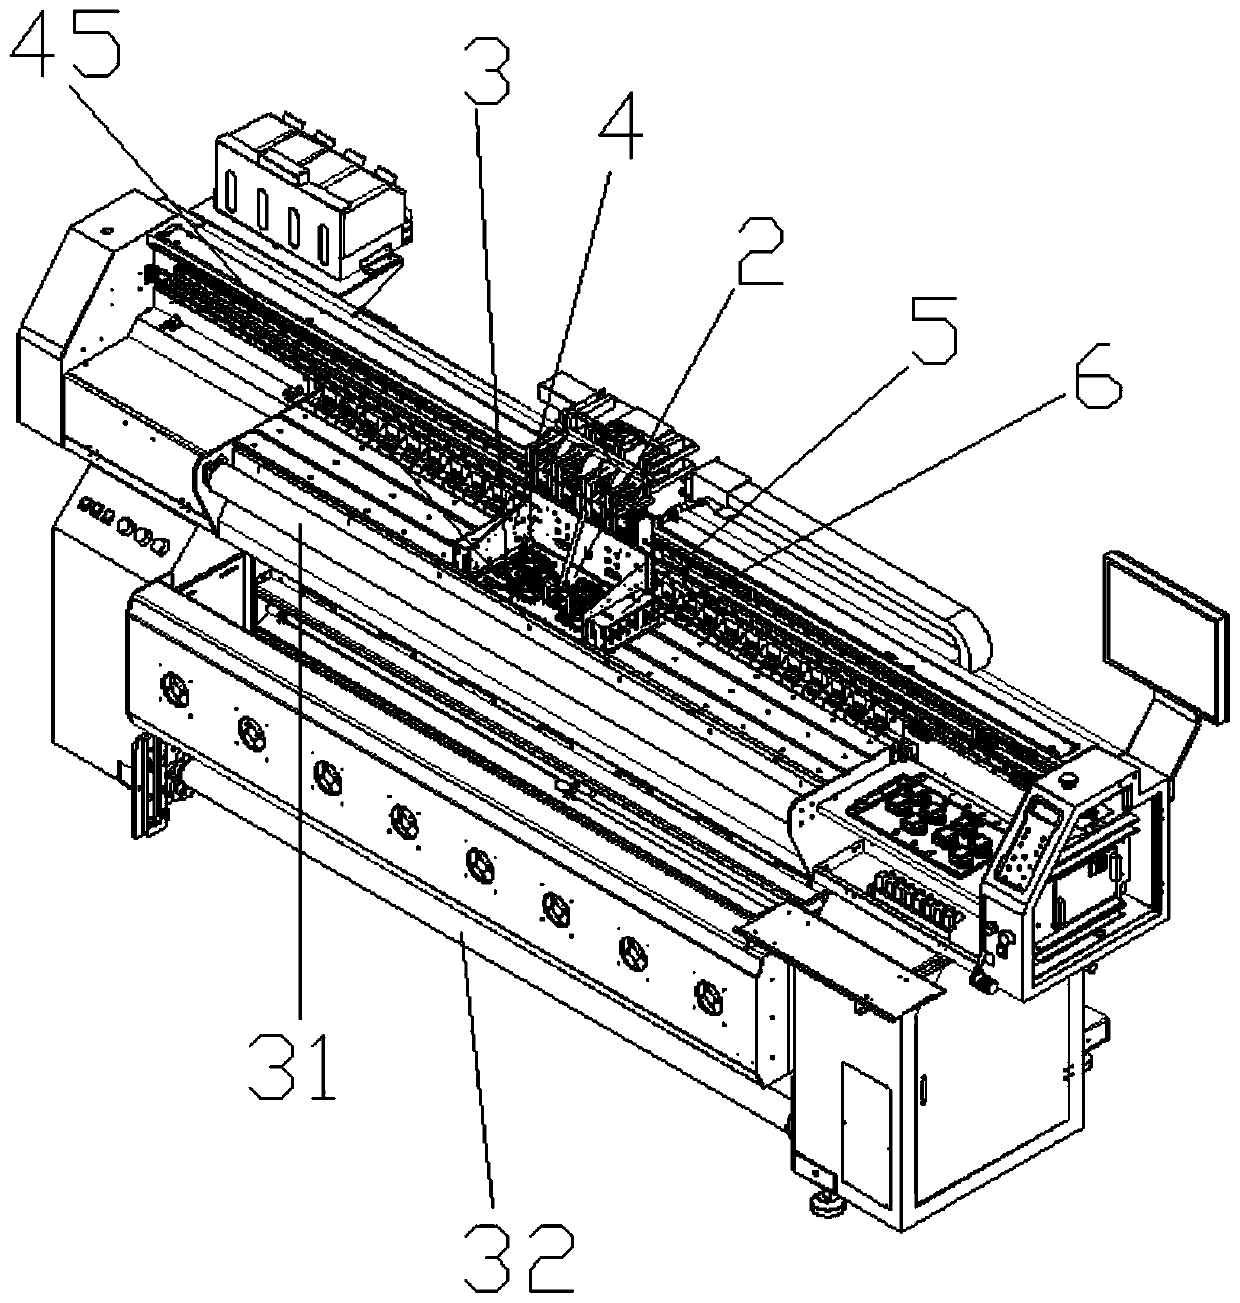 Novel efficient eight-head digital ink-jet printer